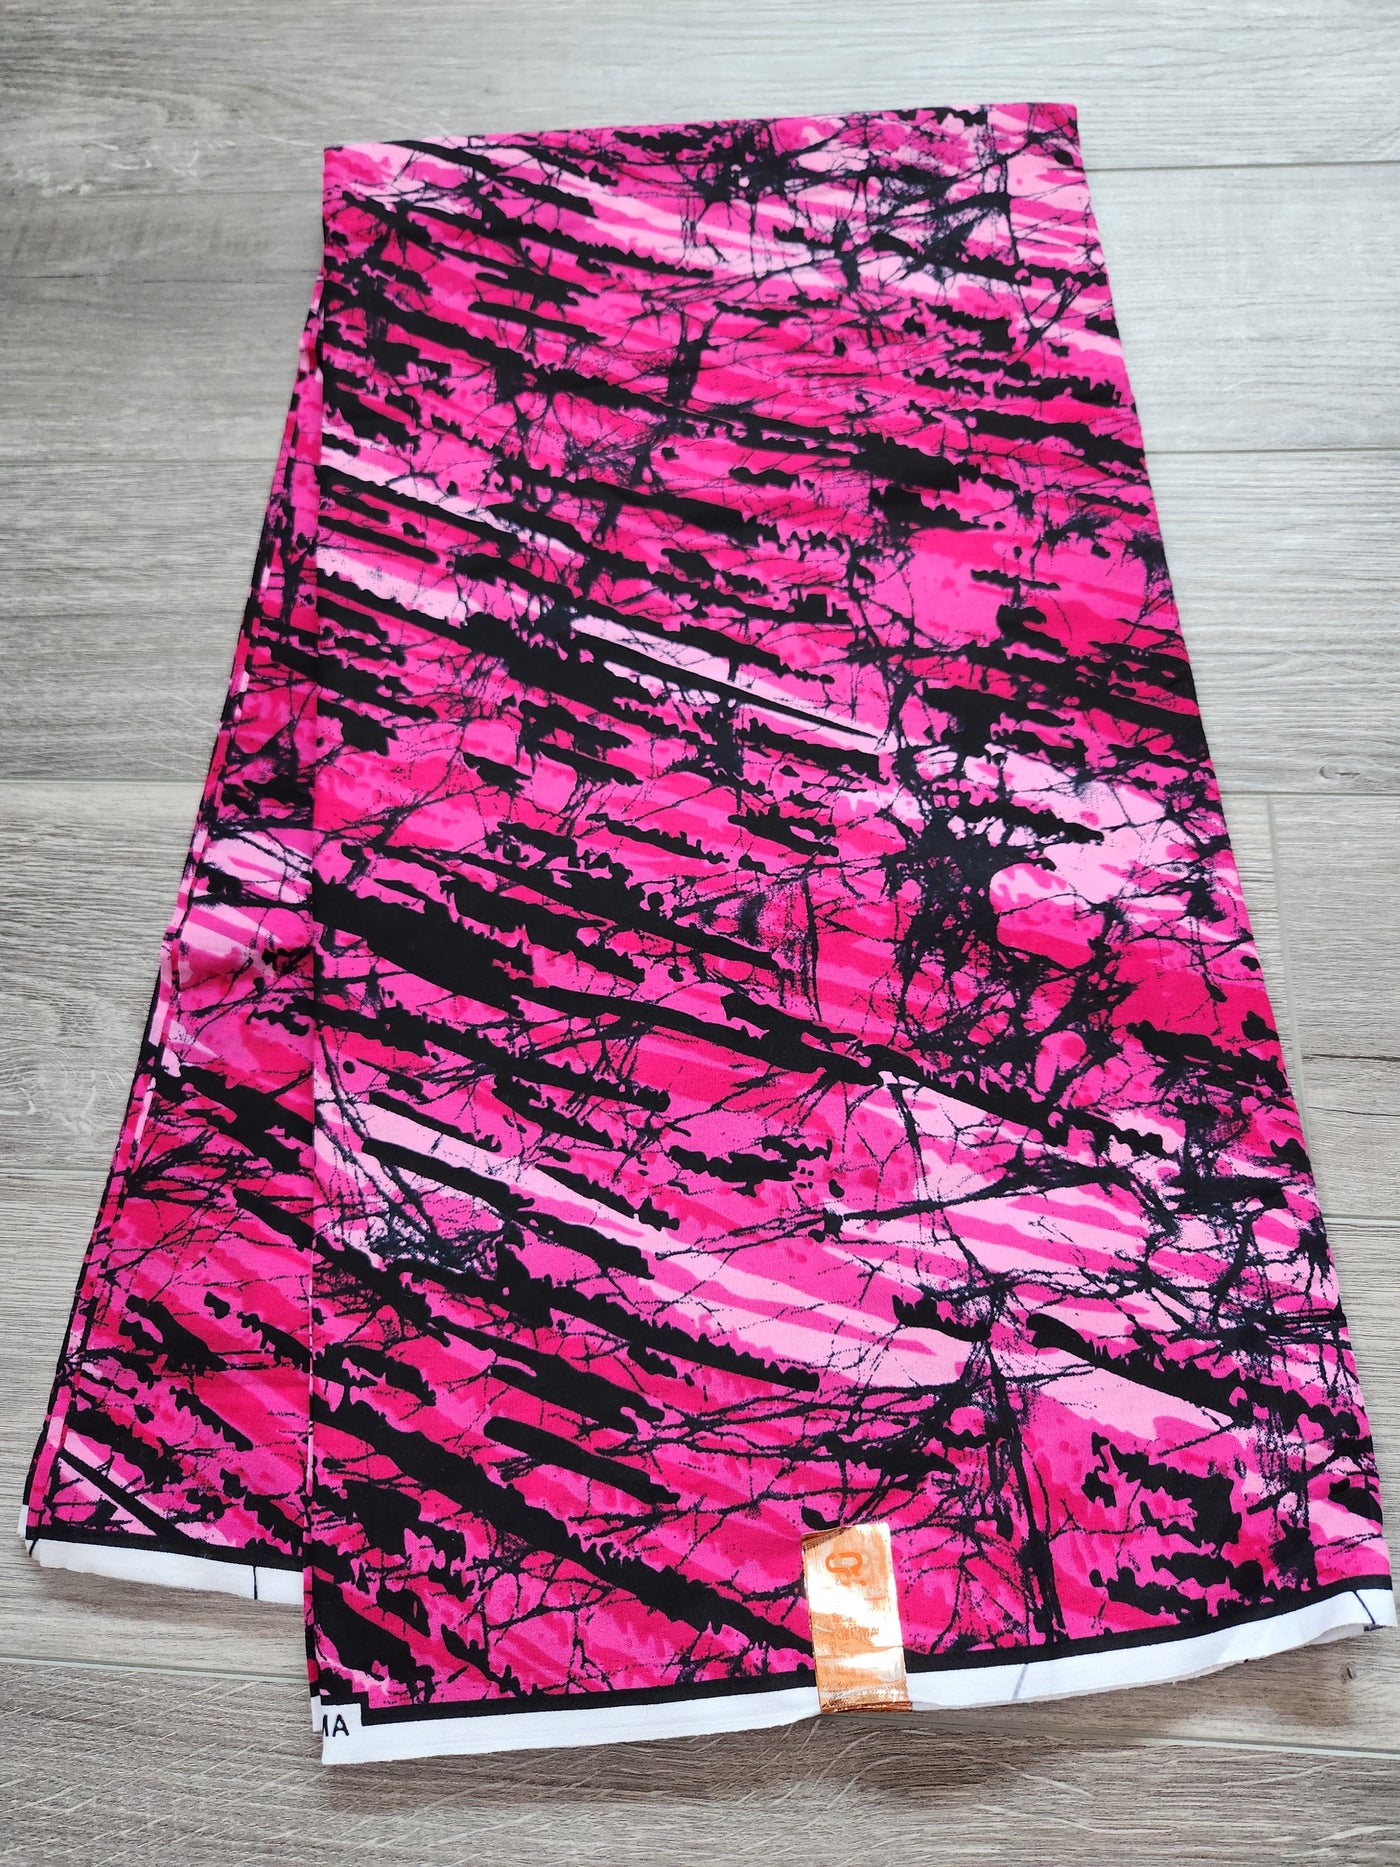 Pink and Black African Print Fabric, Ankara Fabric